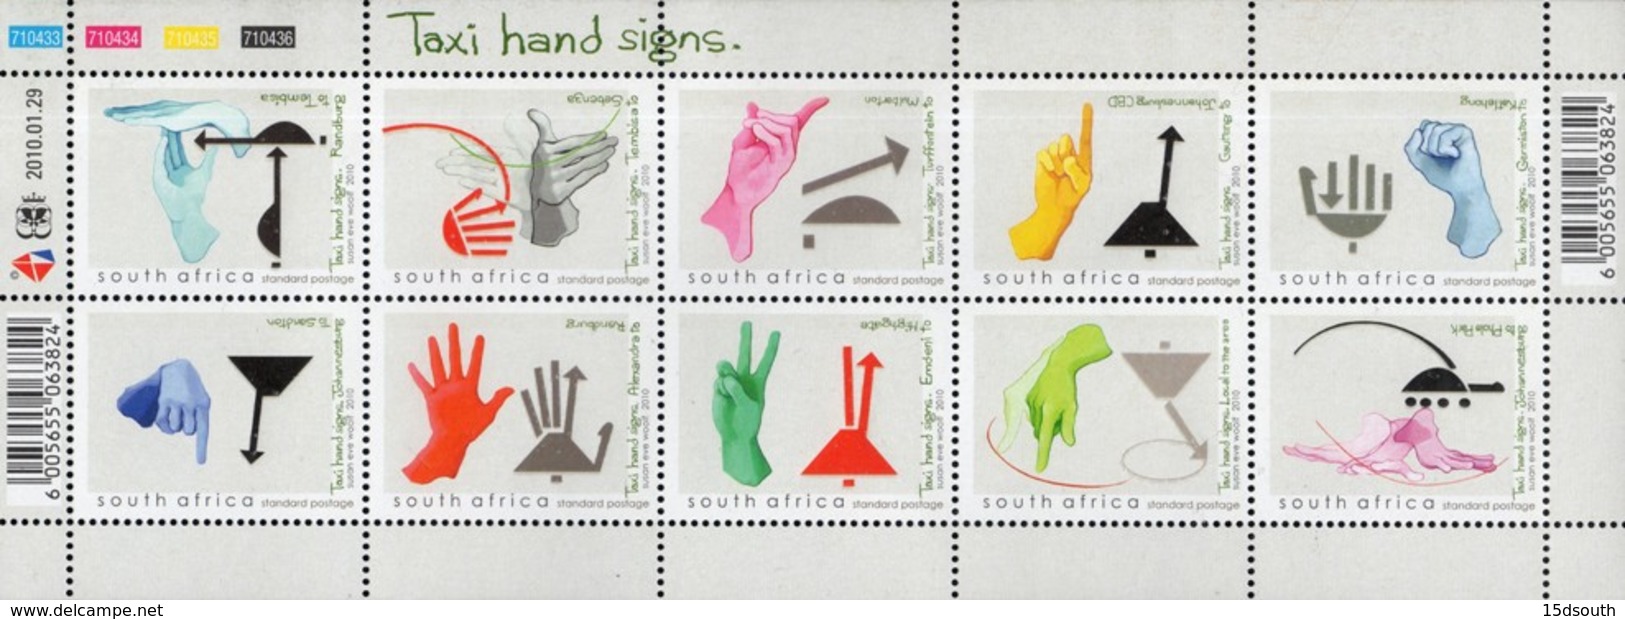 South Africa - 2010 Taxi Hand Signs Sheet (**) # SG 1744a - Altri (Terra)